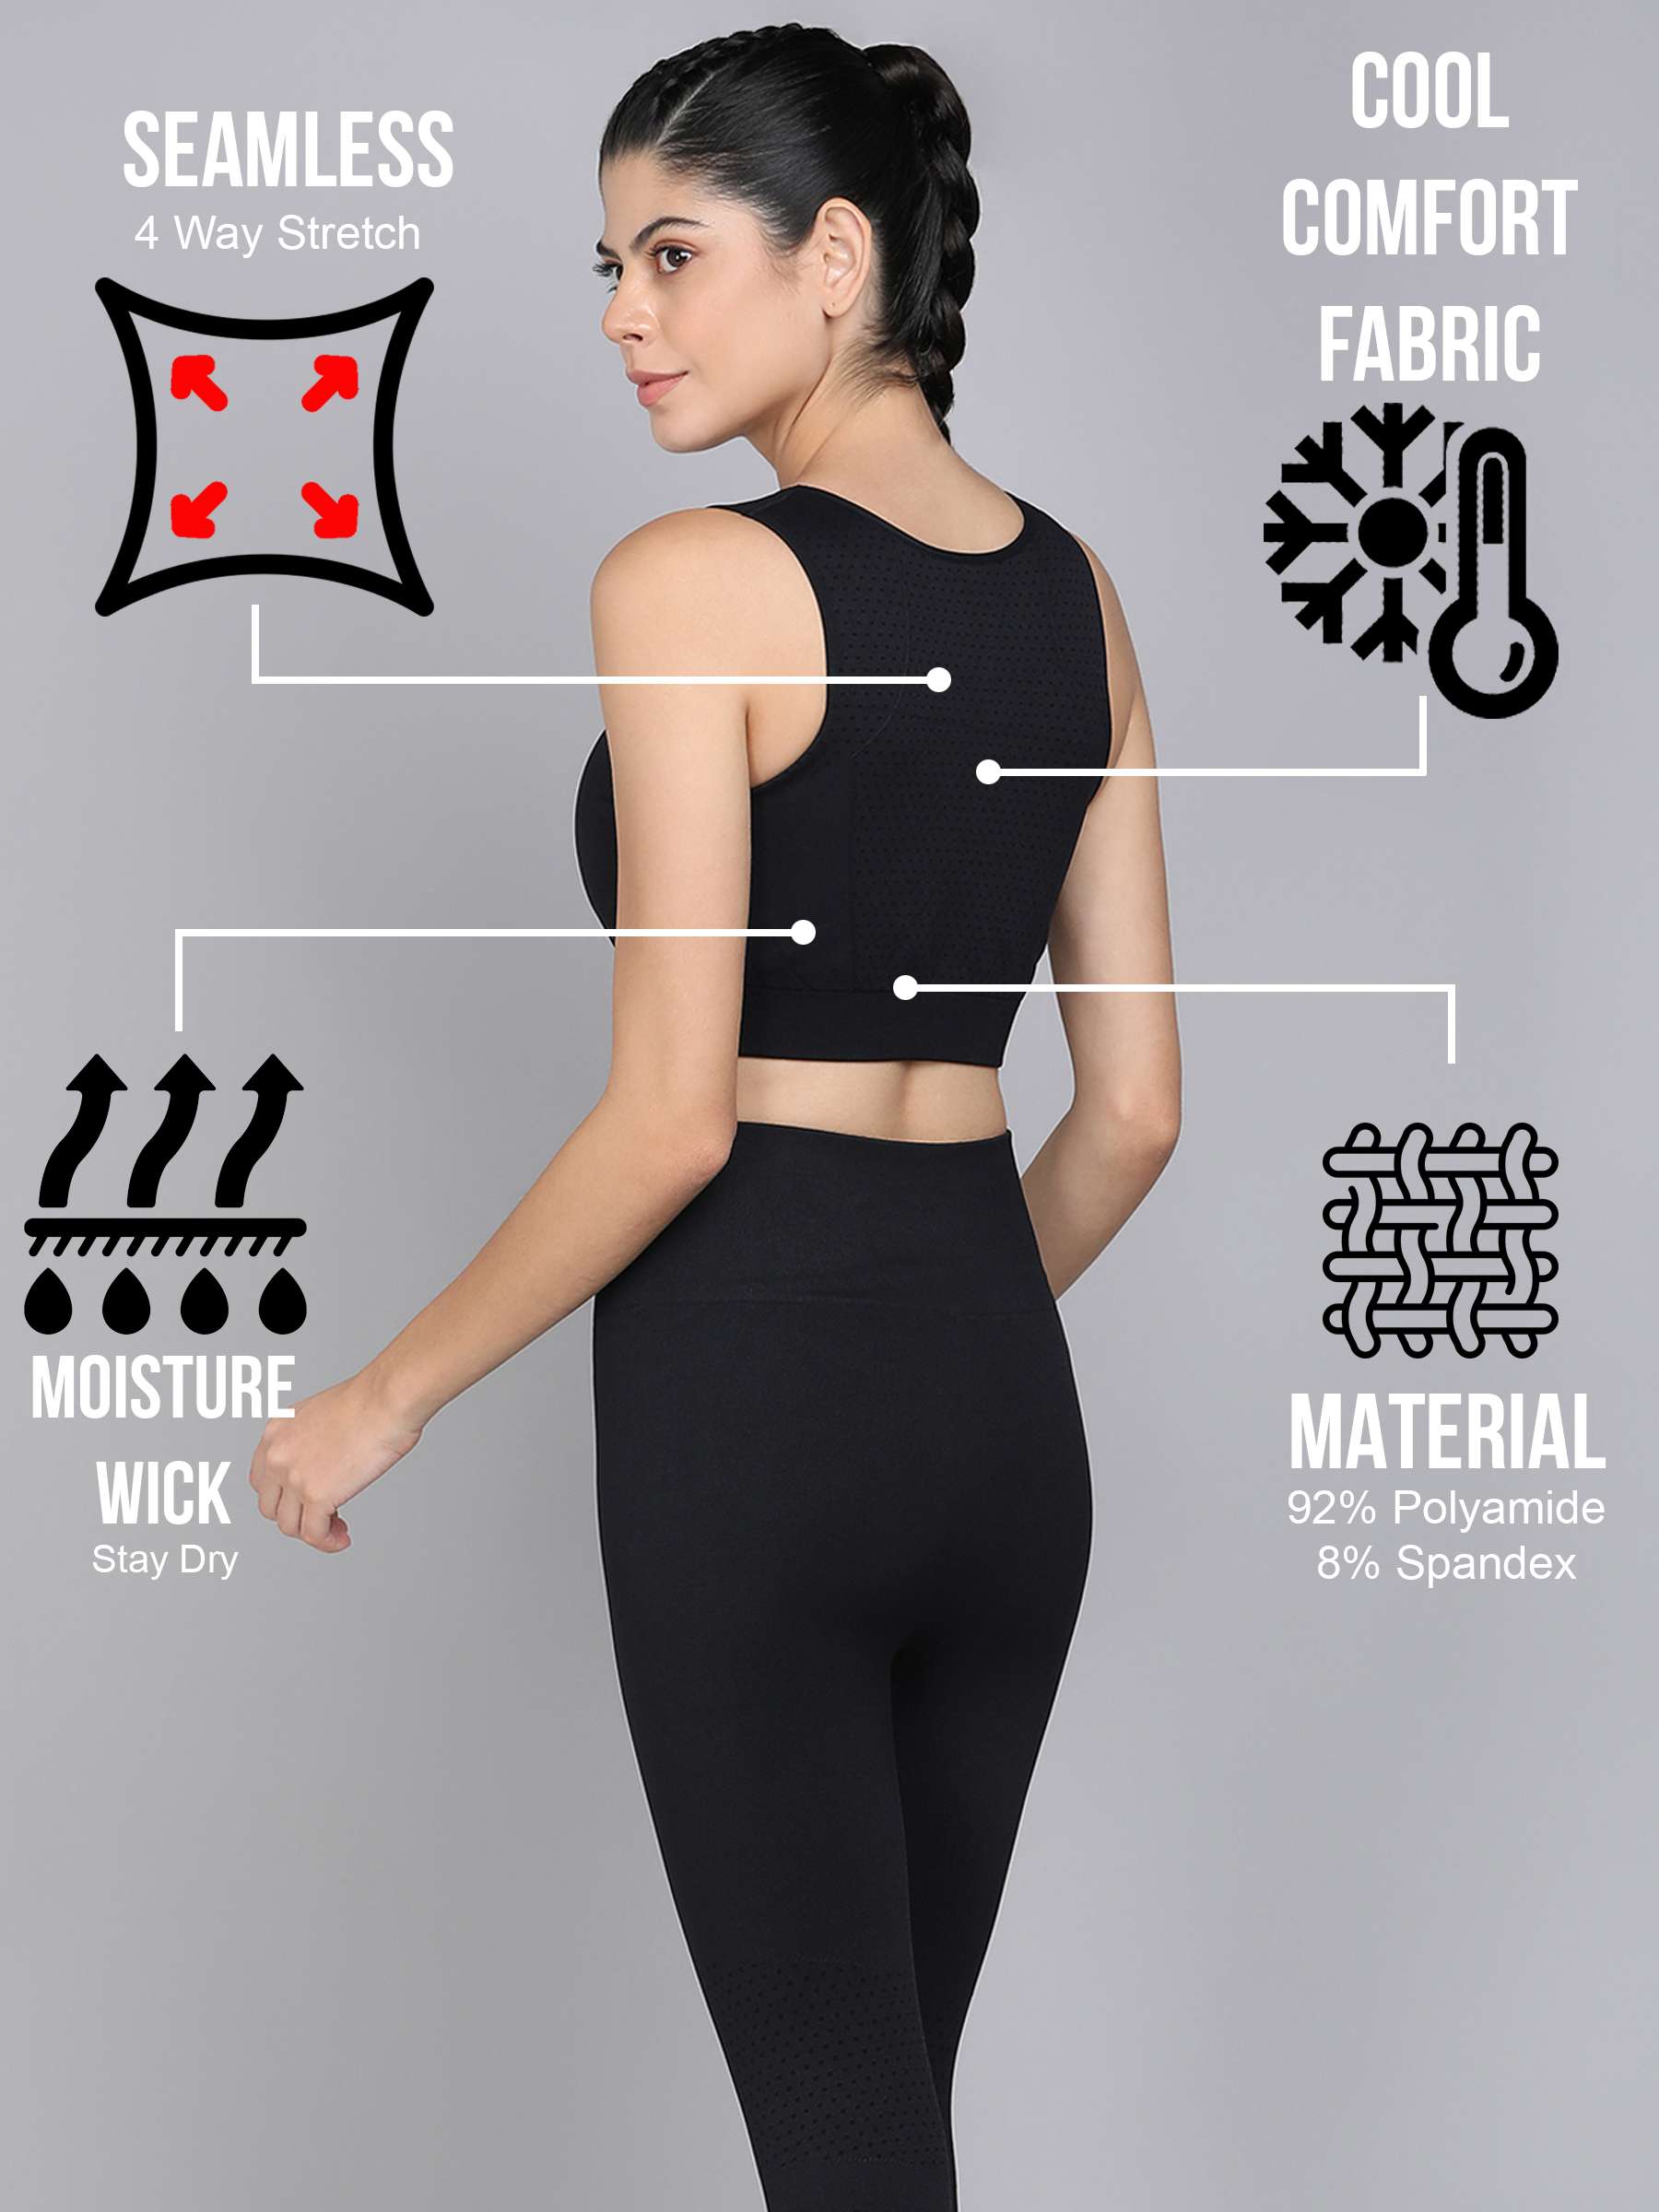 LELINTA Women's Breathable Cotton Racerback Sports Bra High Impact Support  Workout Yoga Bra Size M-L